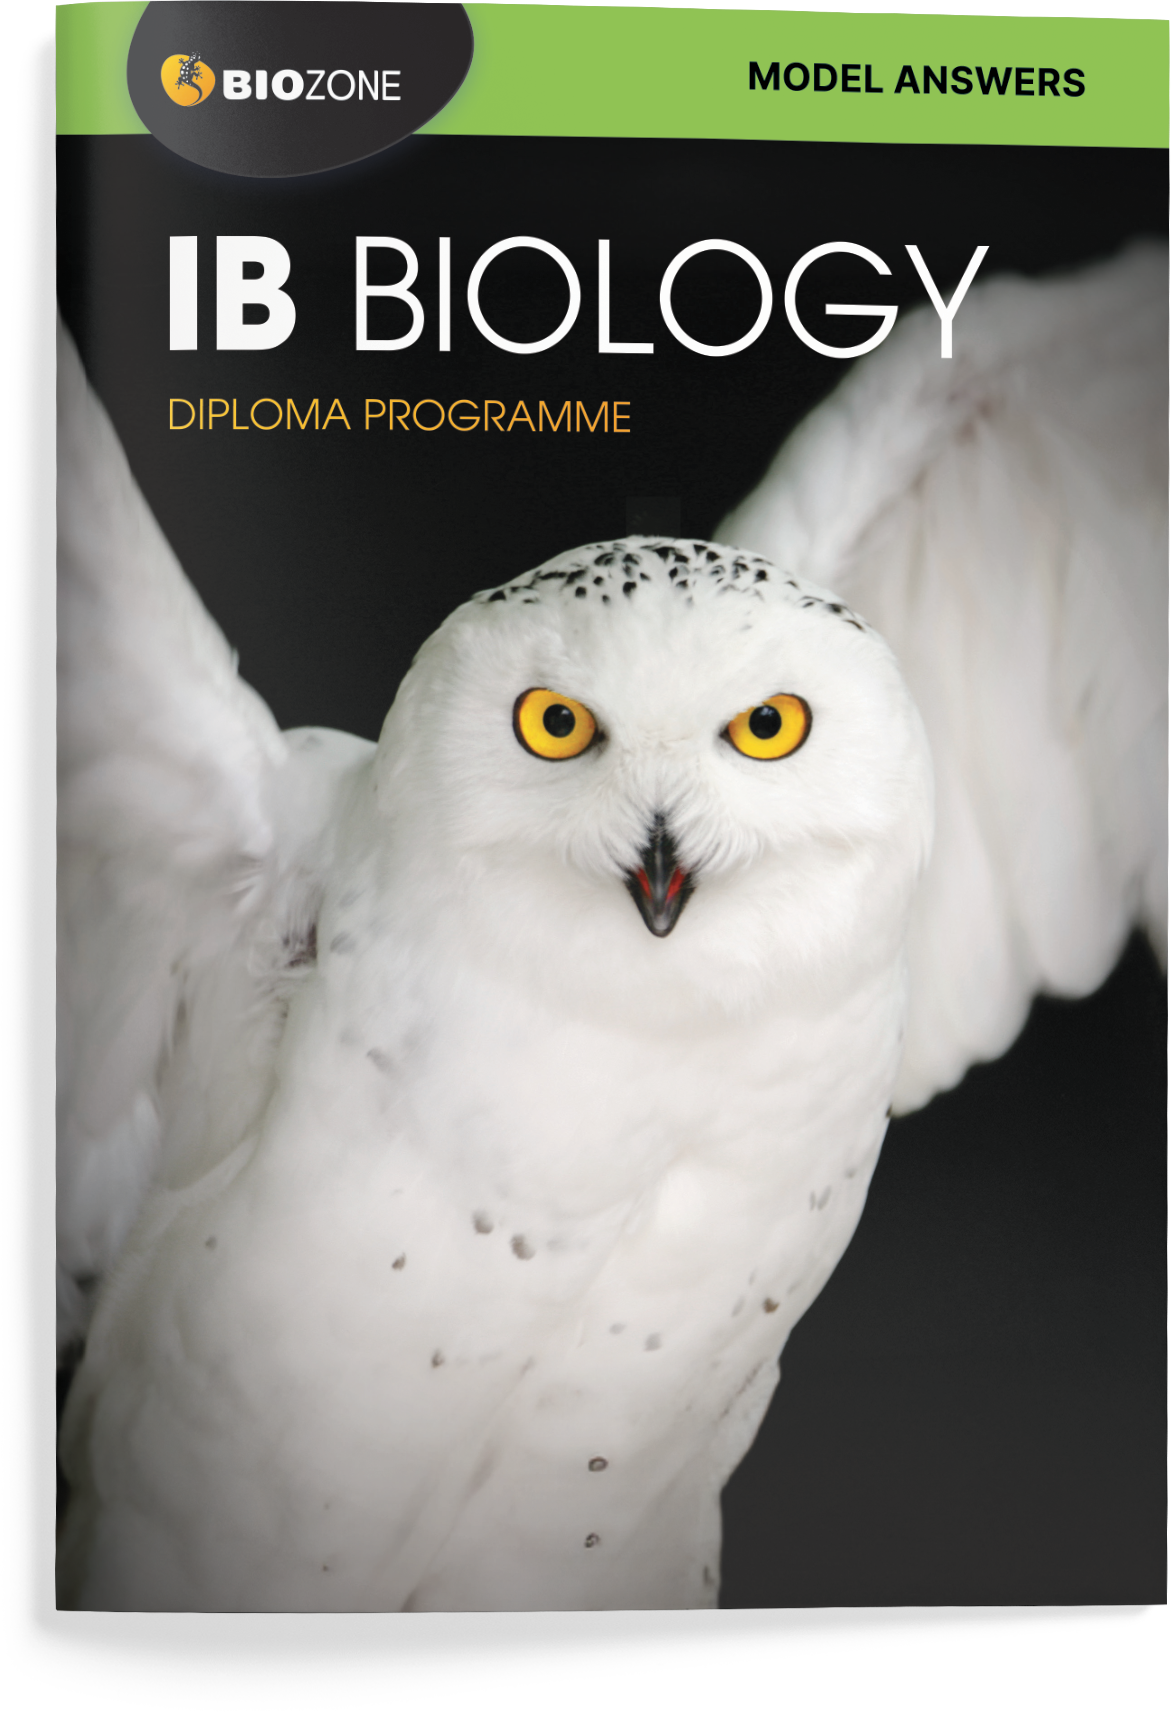 IB Biology model answers